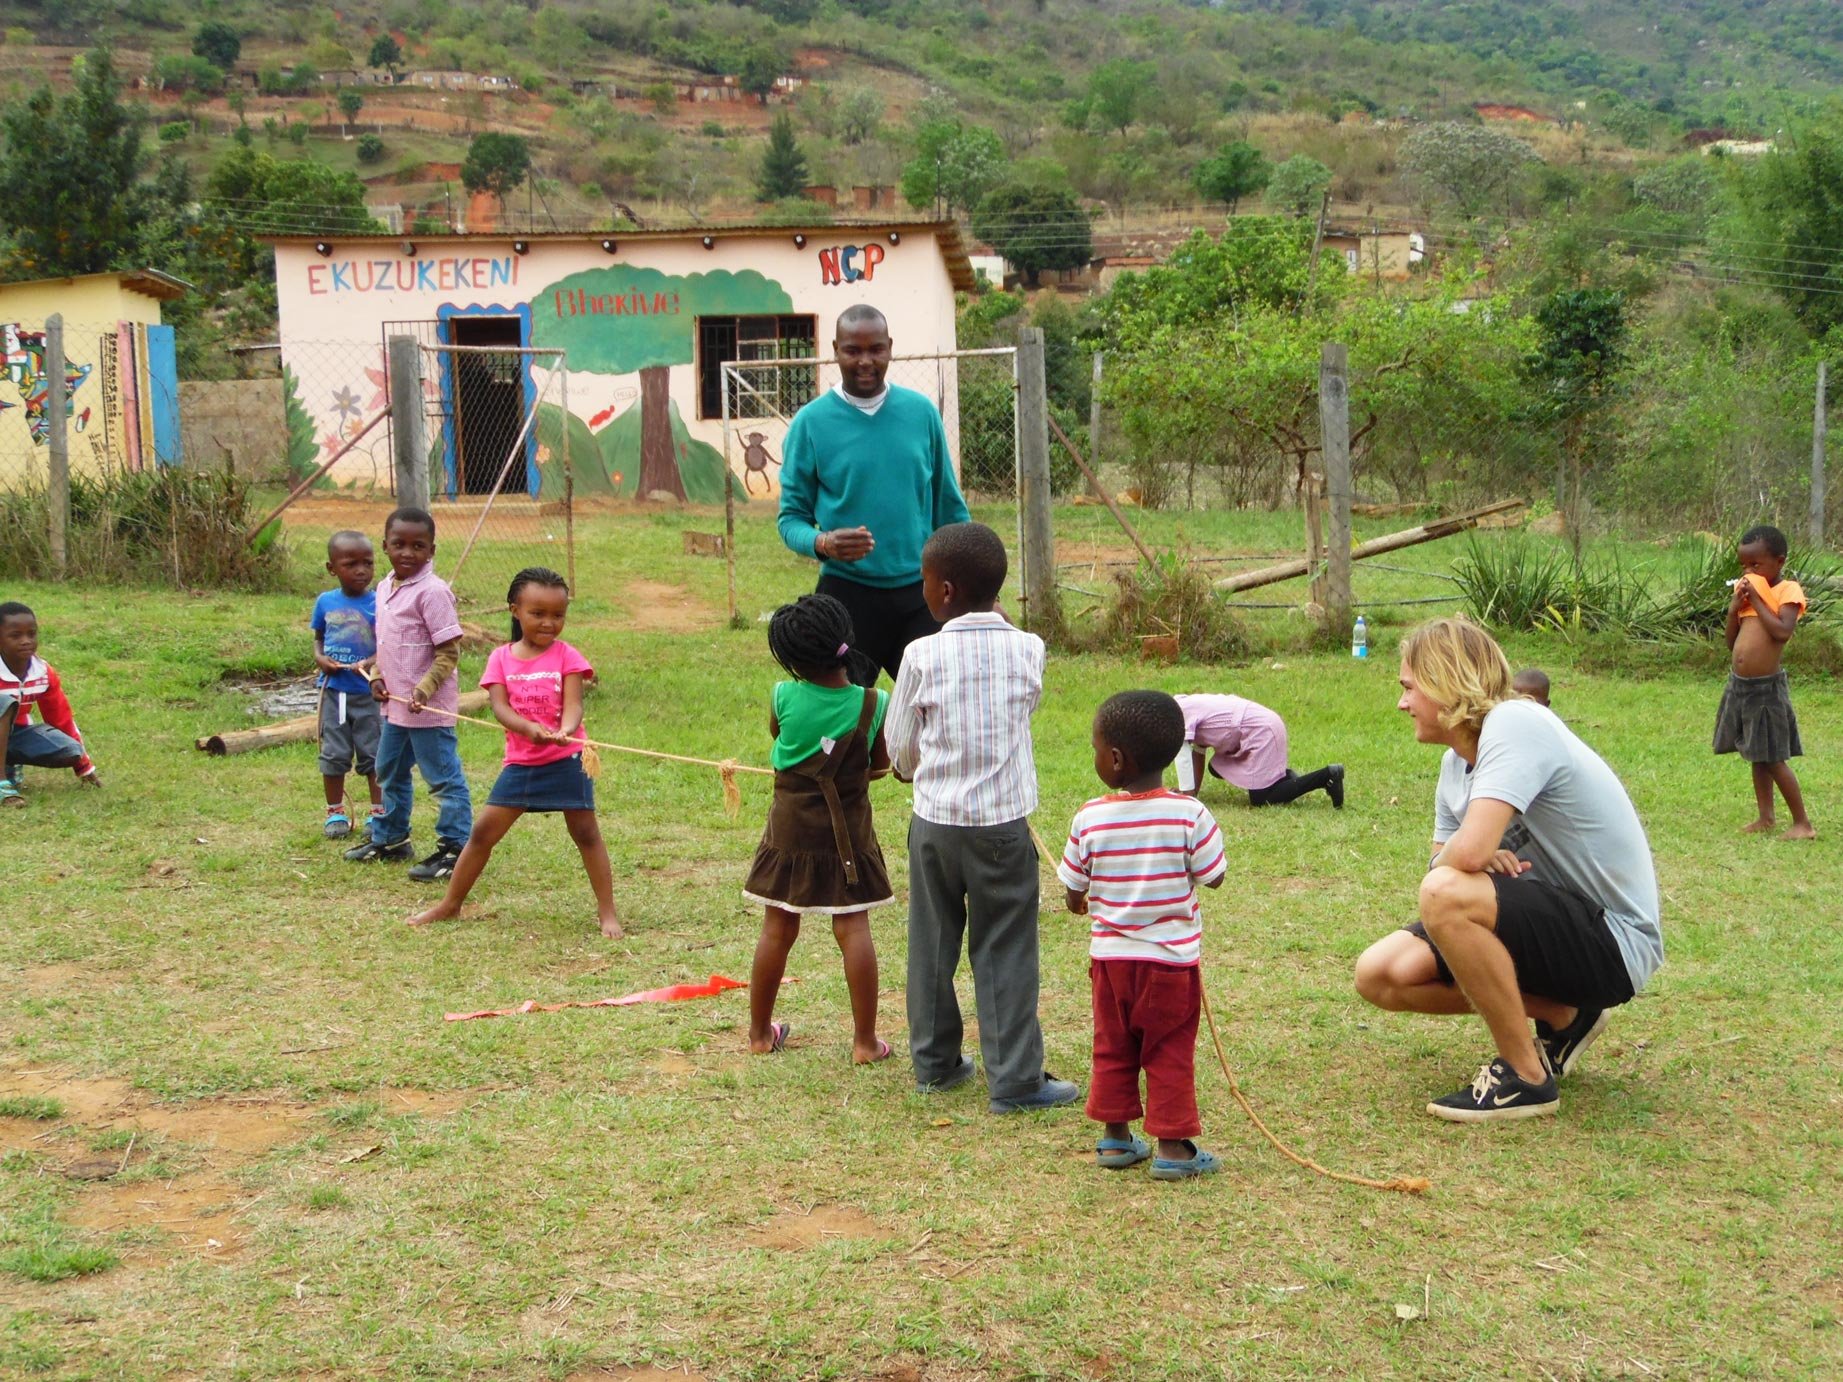 aifs-swasiland-eswatini-freiwilligenarbeit-sports-coaching-personen-kinder-spielen